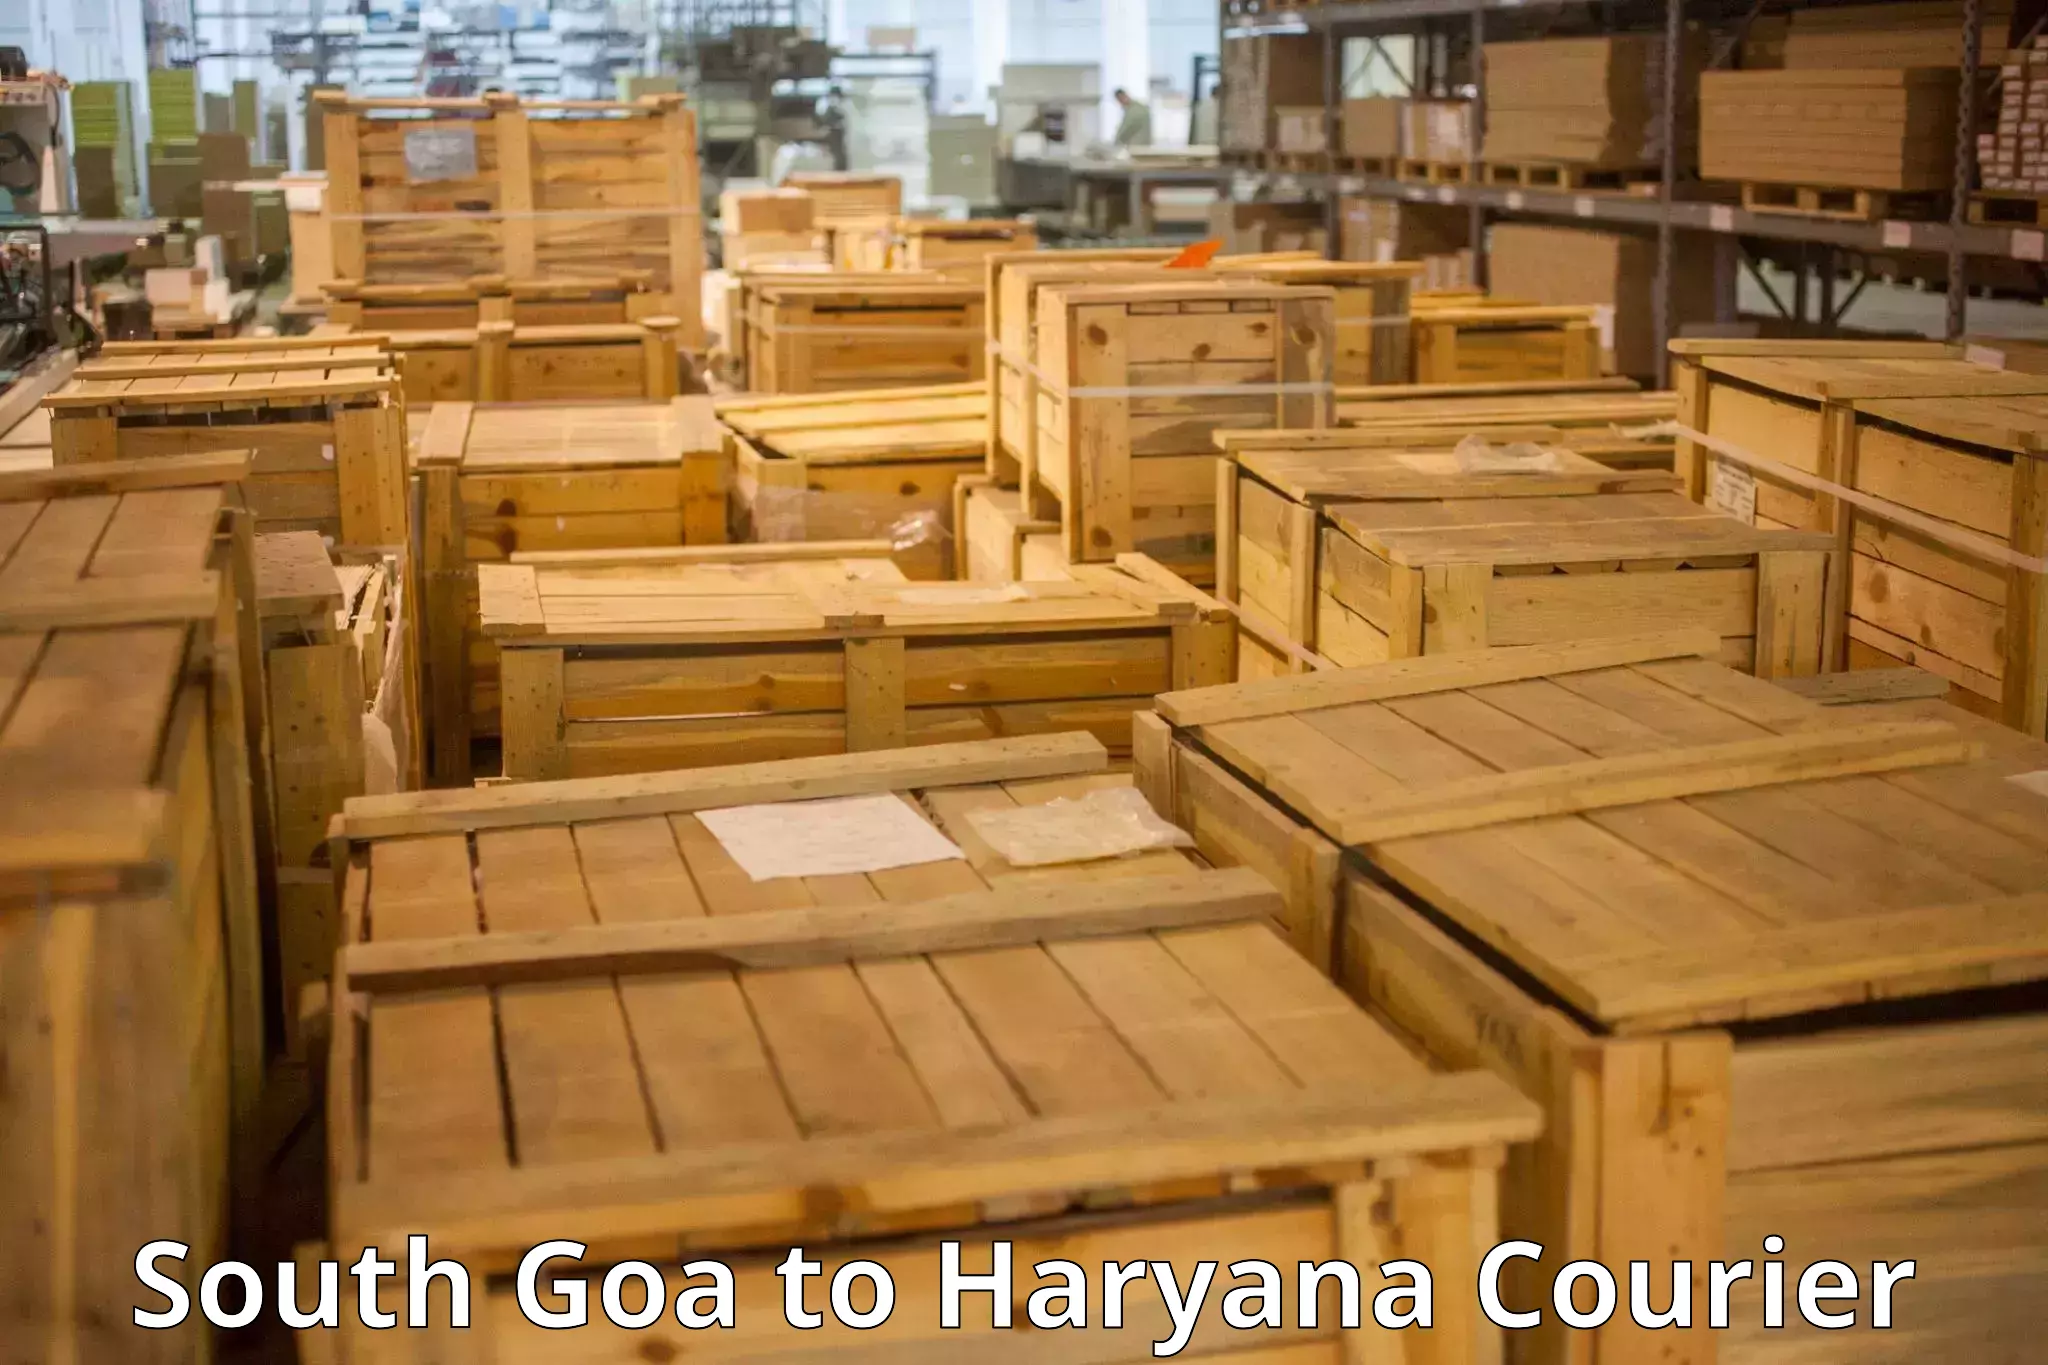 Luggage transfer service South Goa to Gurgaon